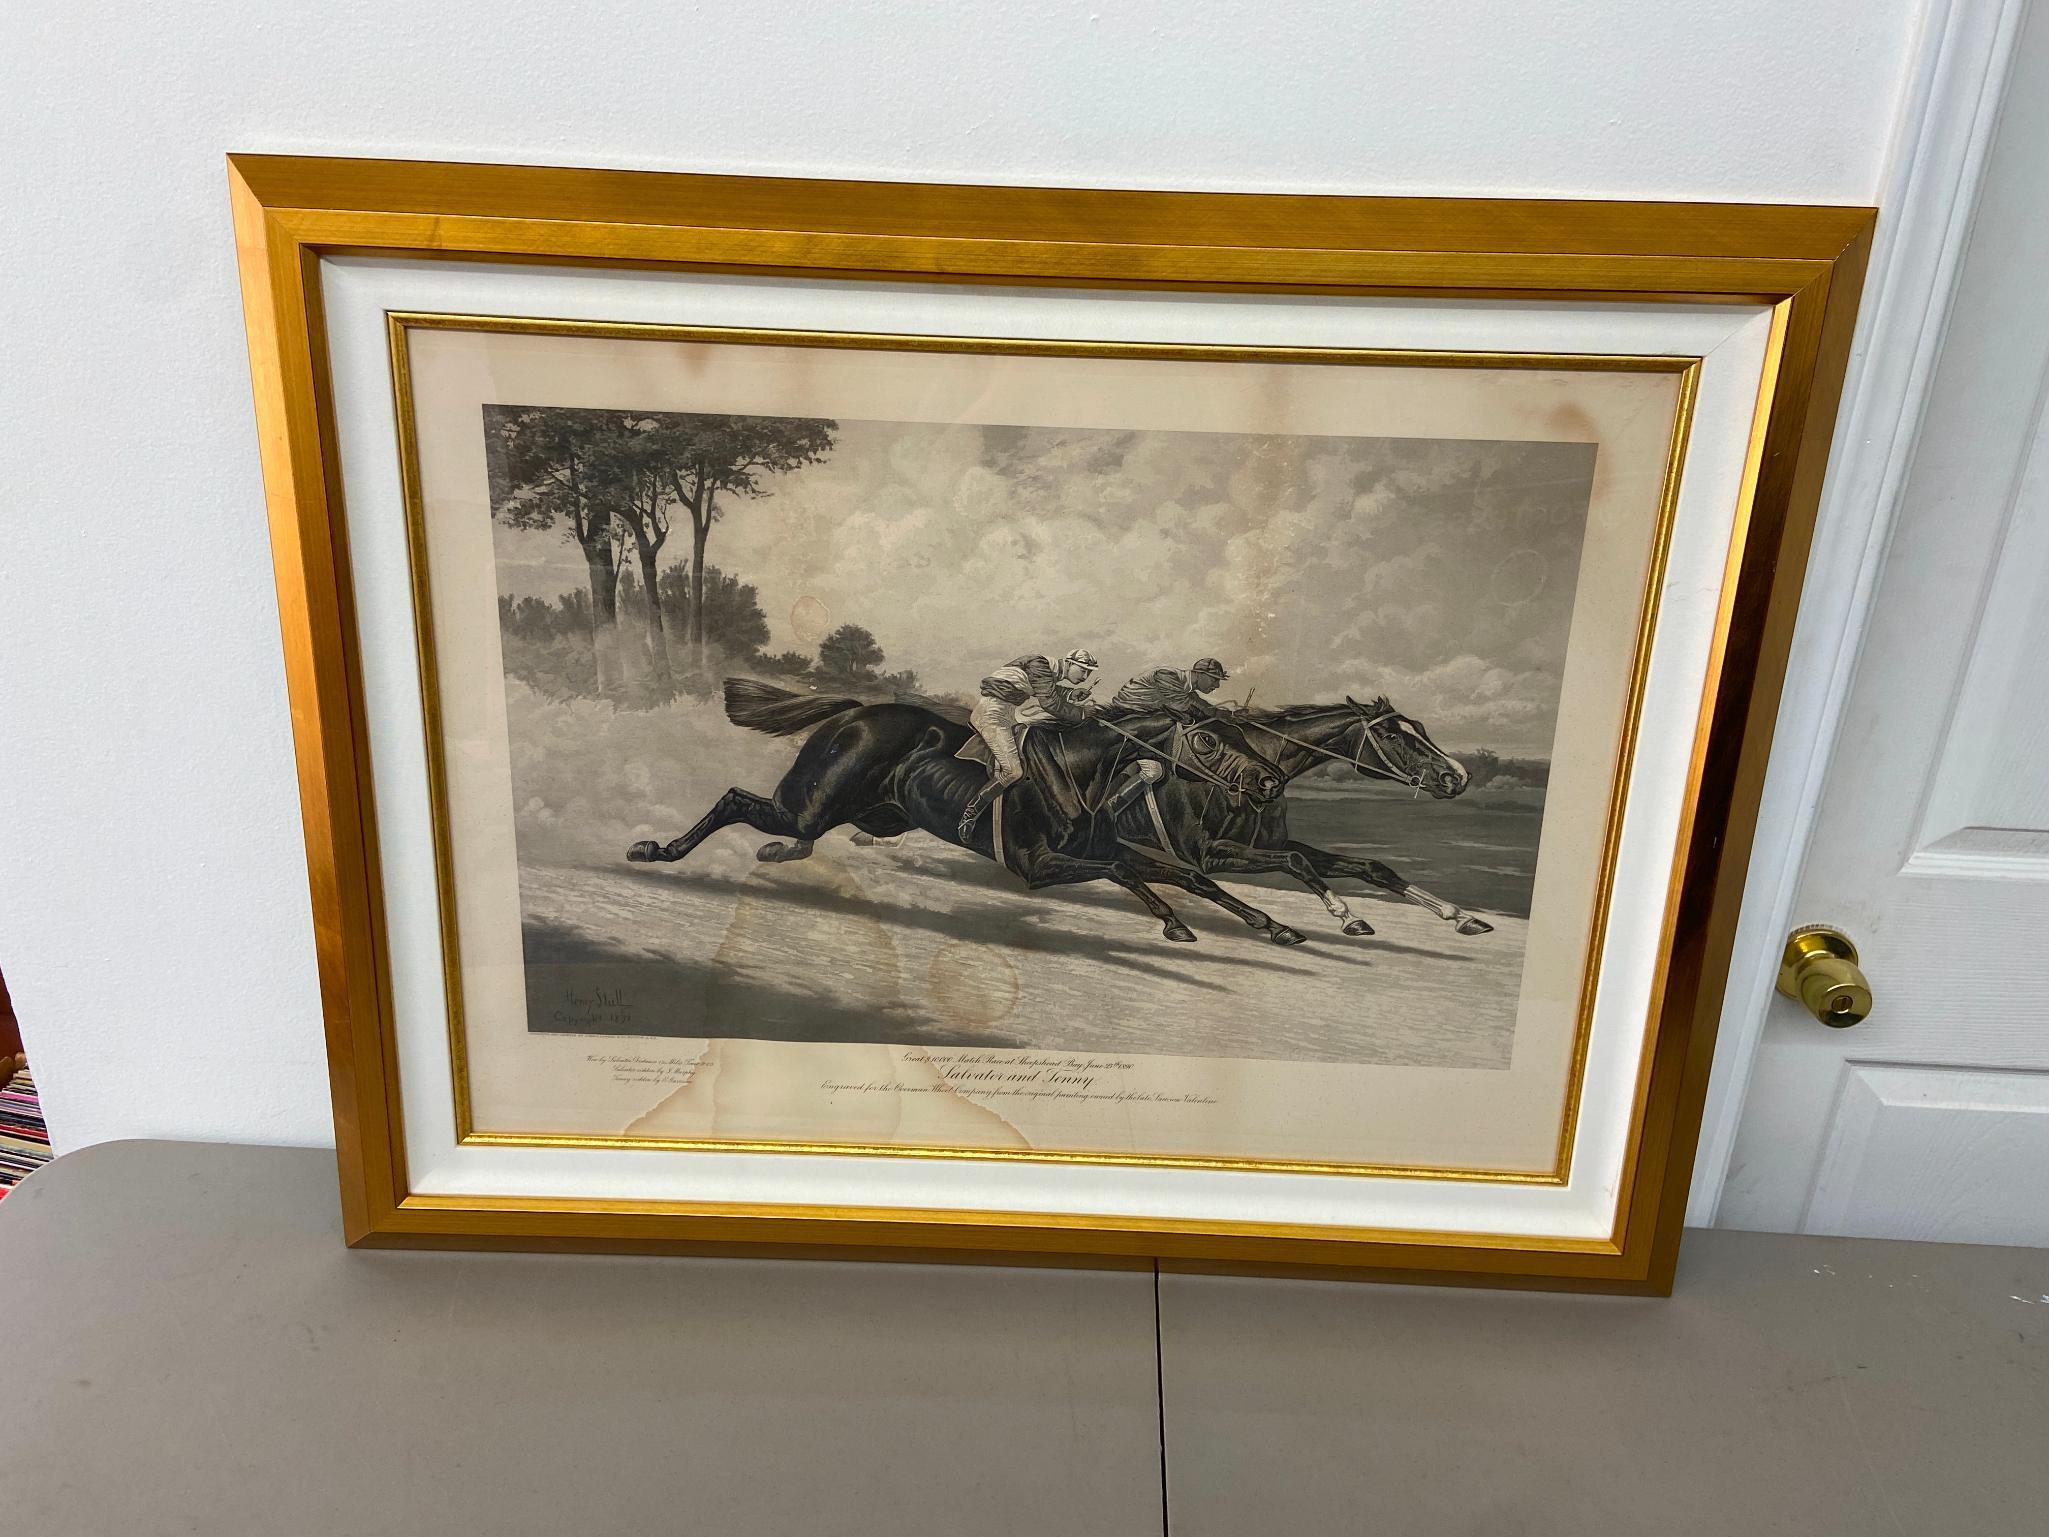 Jockey's Horse Racing Antique Print + Western Shootout Painting